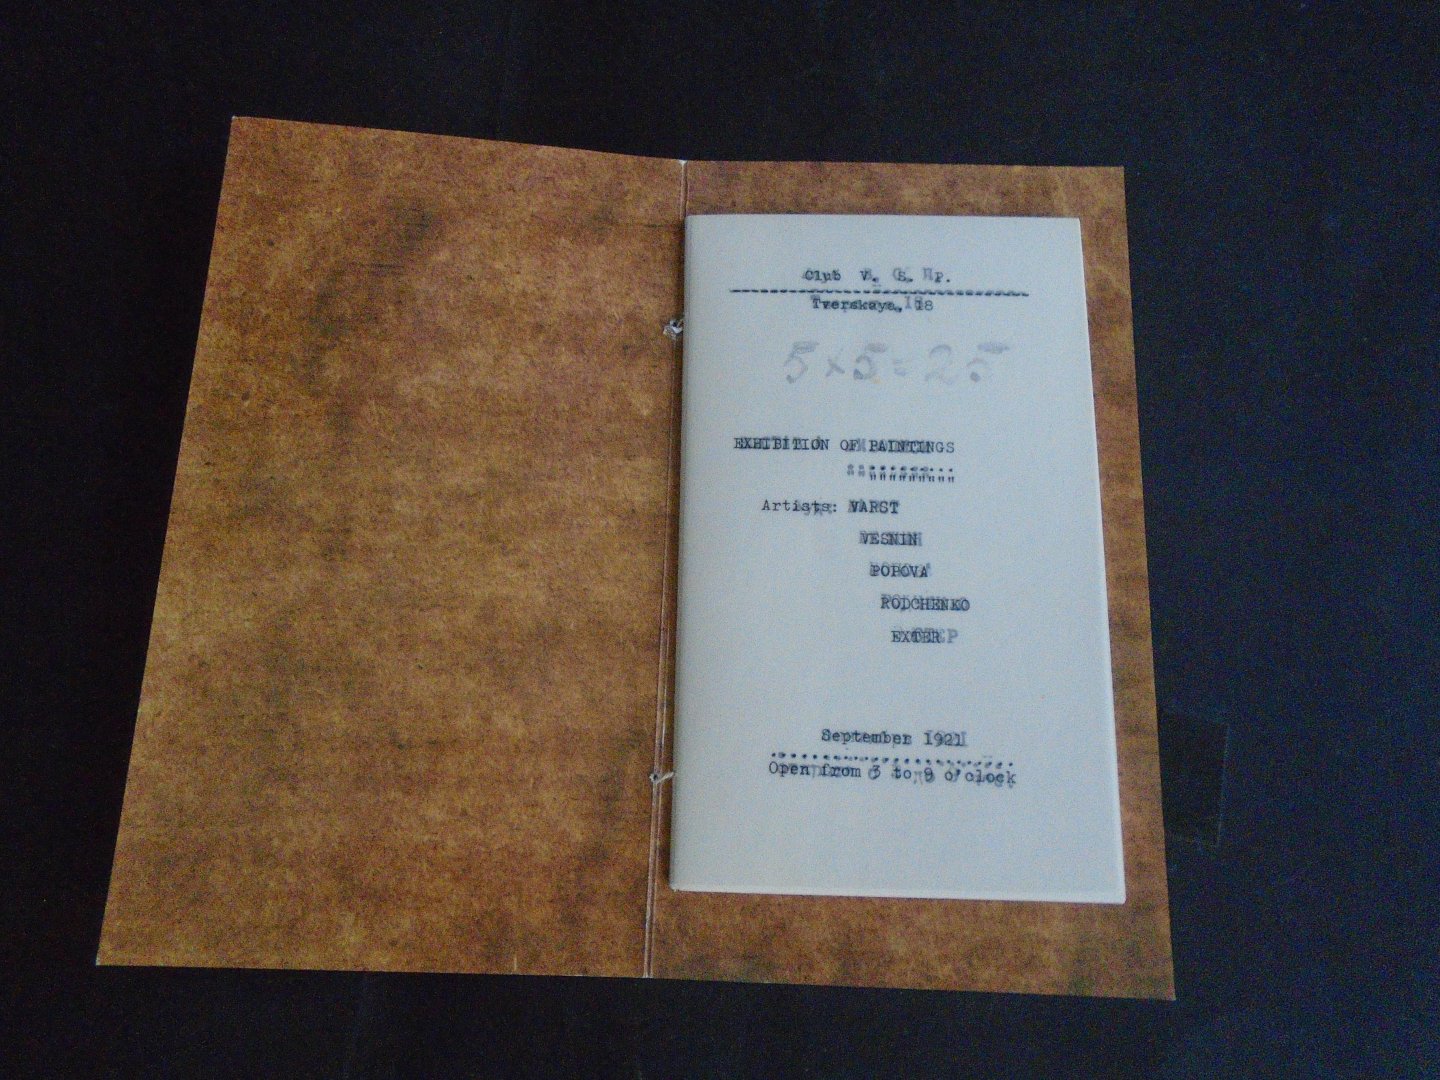 Milner, John vertaling - 5 x 5 = 25 . Russian  Avant- Garde exhibition ,  Moscow, 1921. A Catalogue in facsimile.